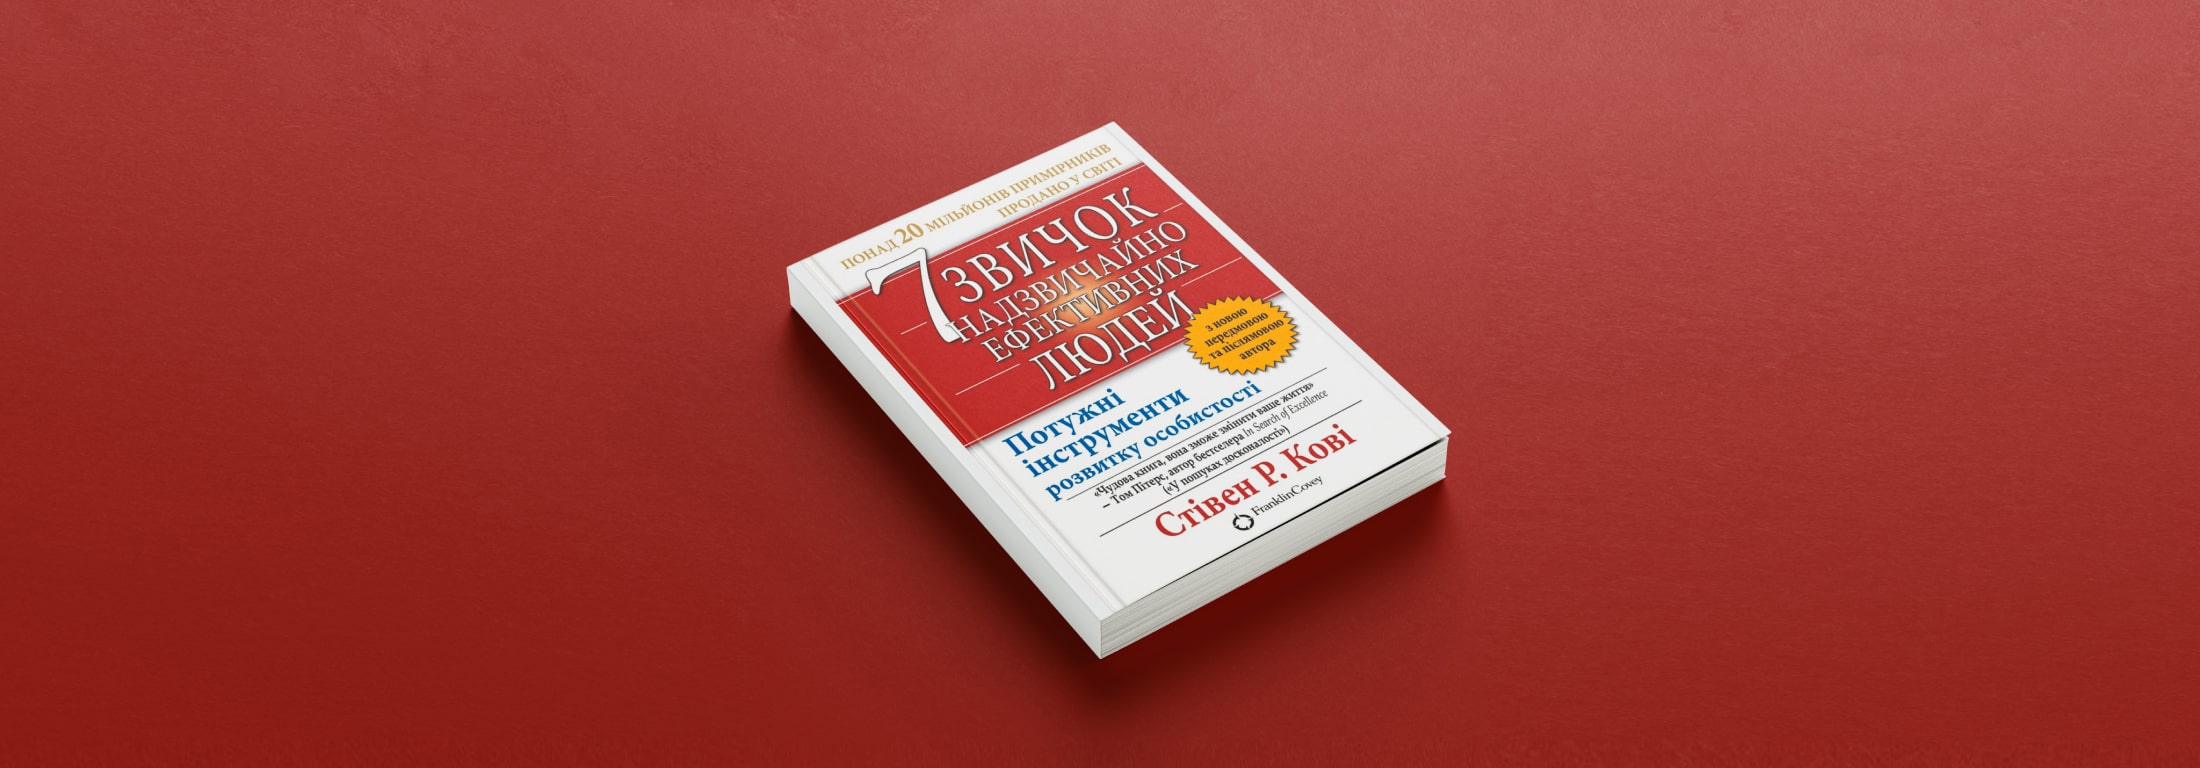 Стівен Кові «‎‎7 звичок надзвичайно ефективних людей» короткий огляд книги | Почни з себе